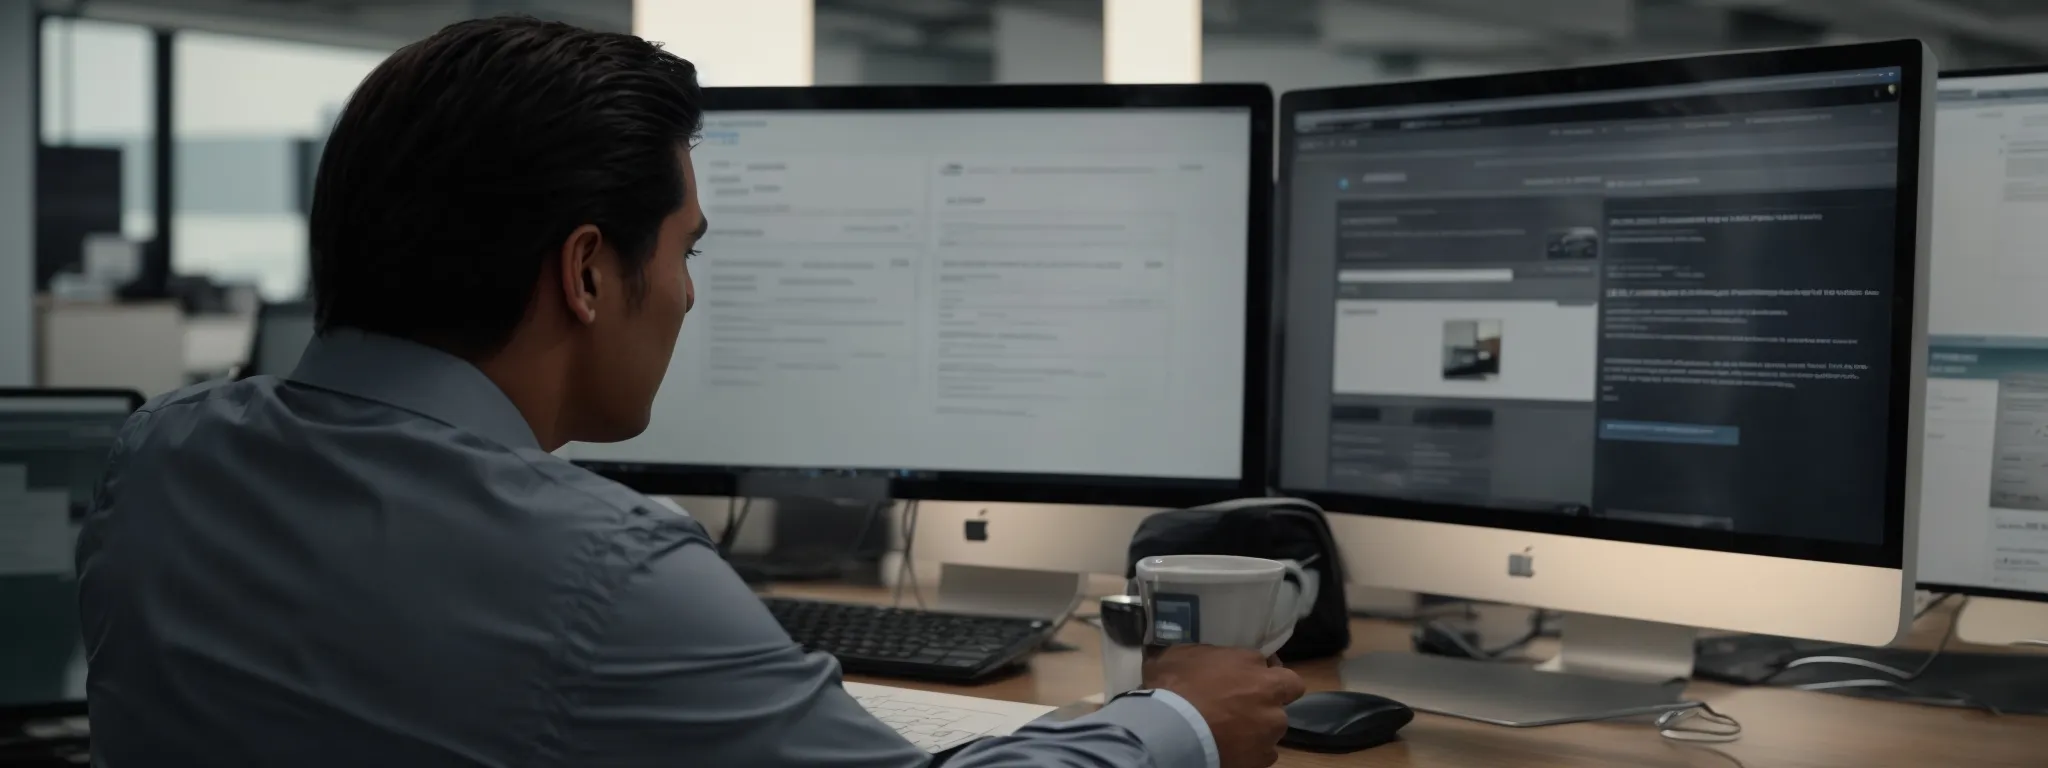 a dealership manager reviews a sleek website interface on a computer screen in a modern office setting.